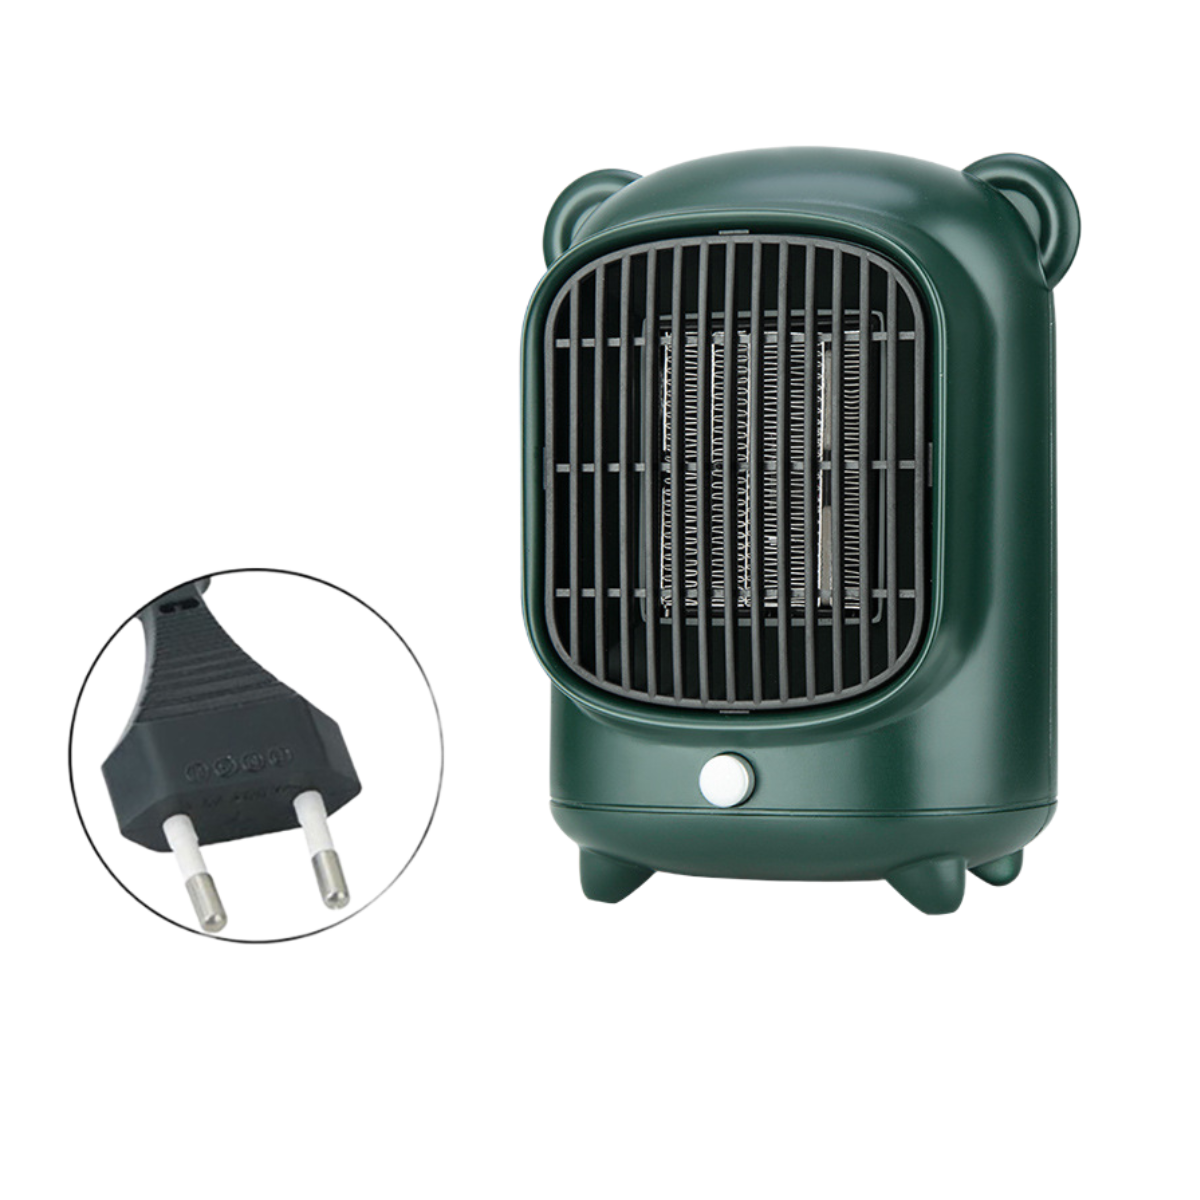 und (500 Ausschalten Heater-Green: Bear PTC-Schnellheizung, UWOT Electric geräuscharm, Mini-Elektroheizung Watt) sicheres leise